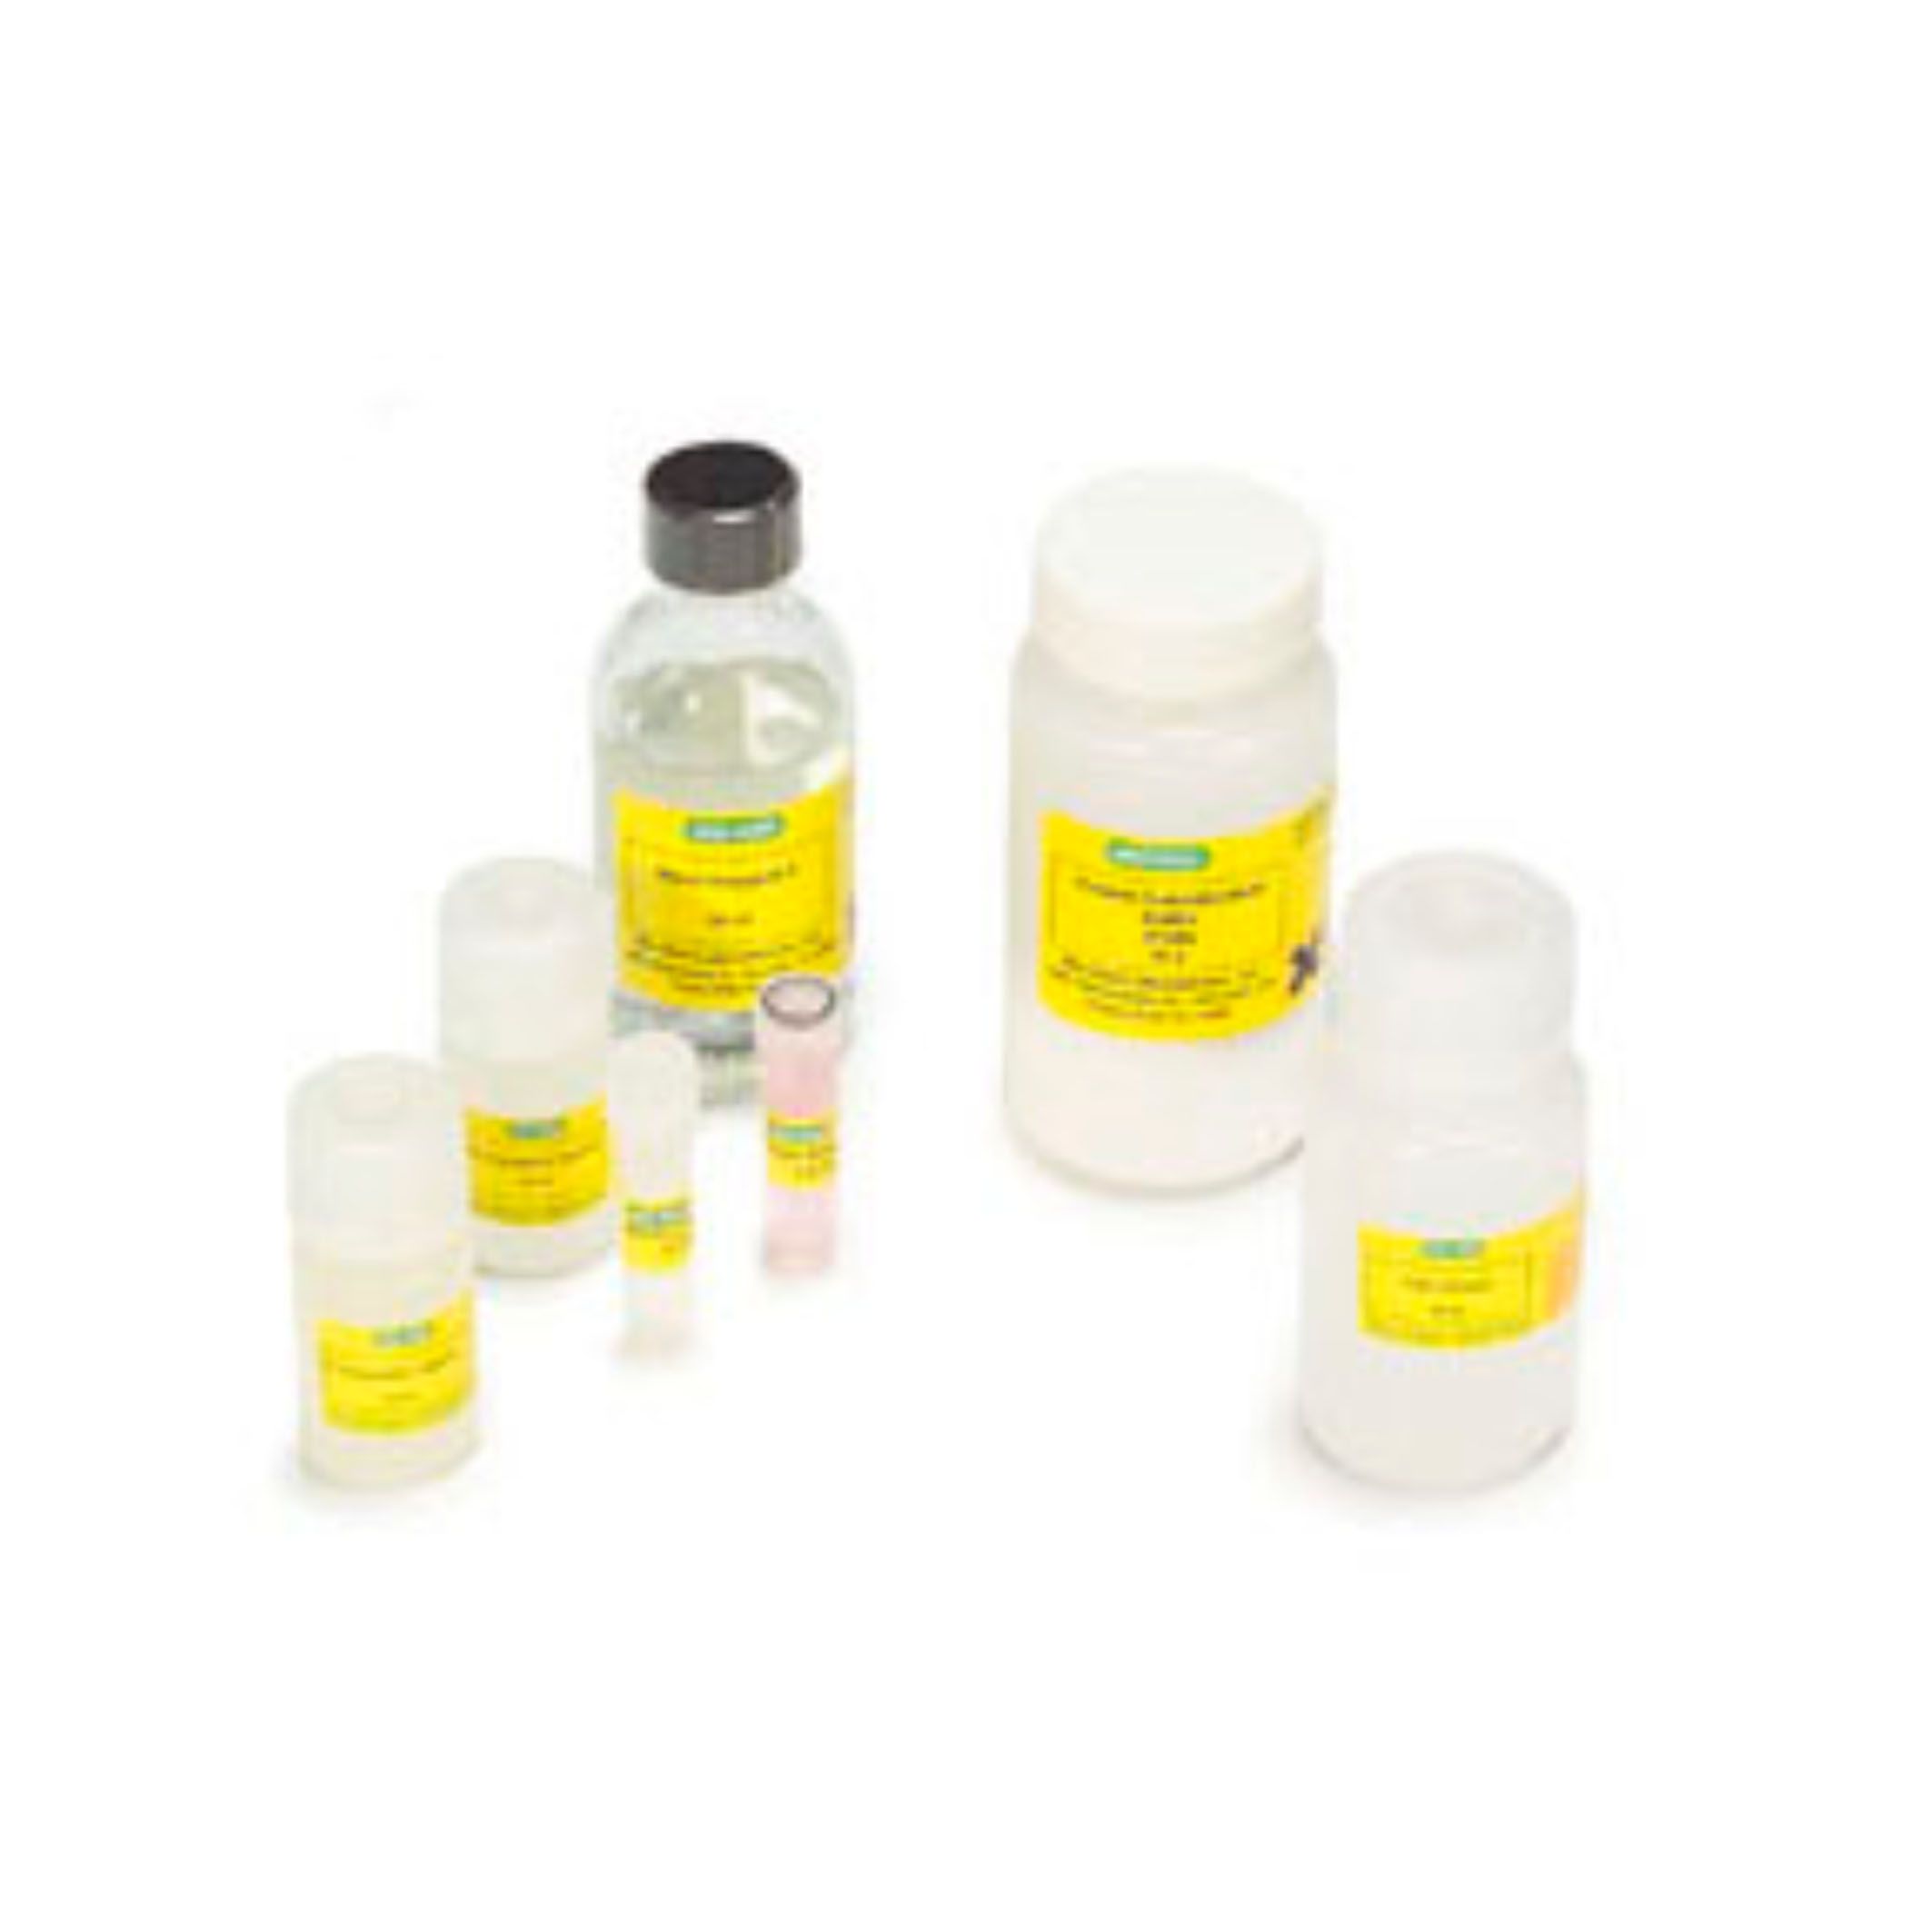  伯乐Bio-rad Plant Cell Lysis Kit植物细胞裂解试剂盒163-2142，现货